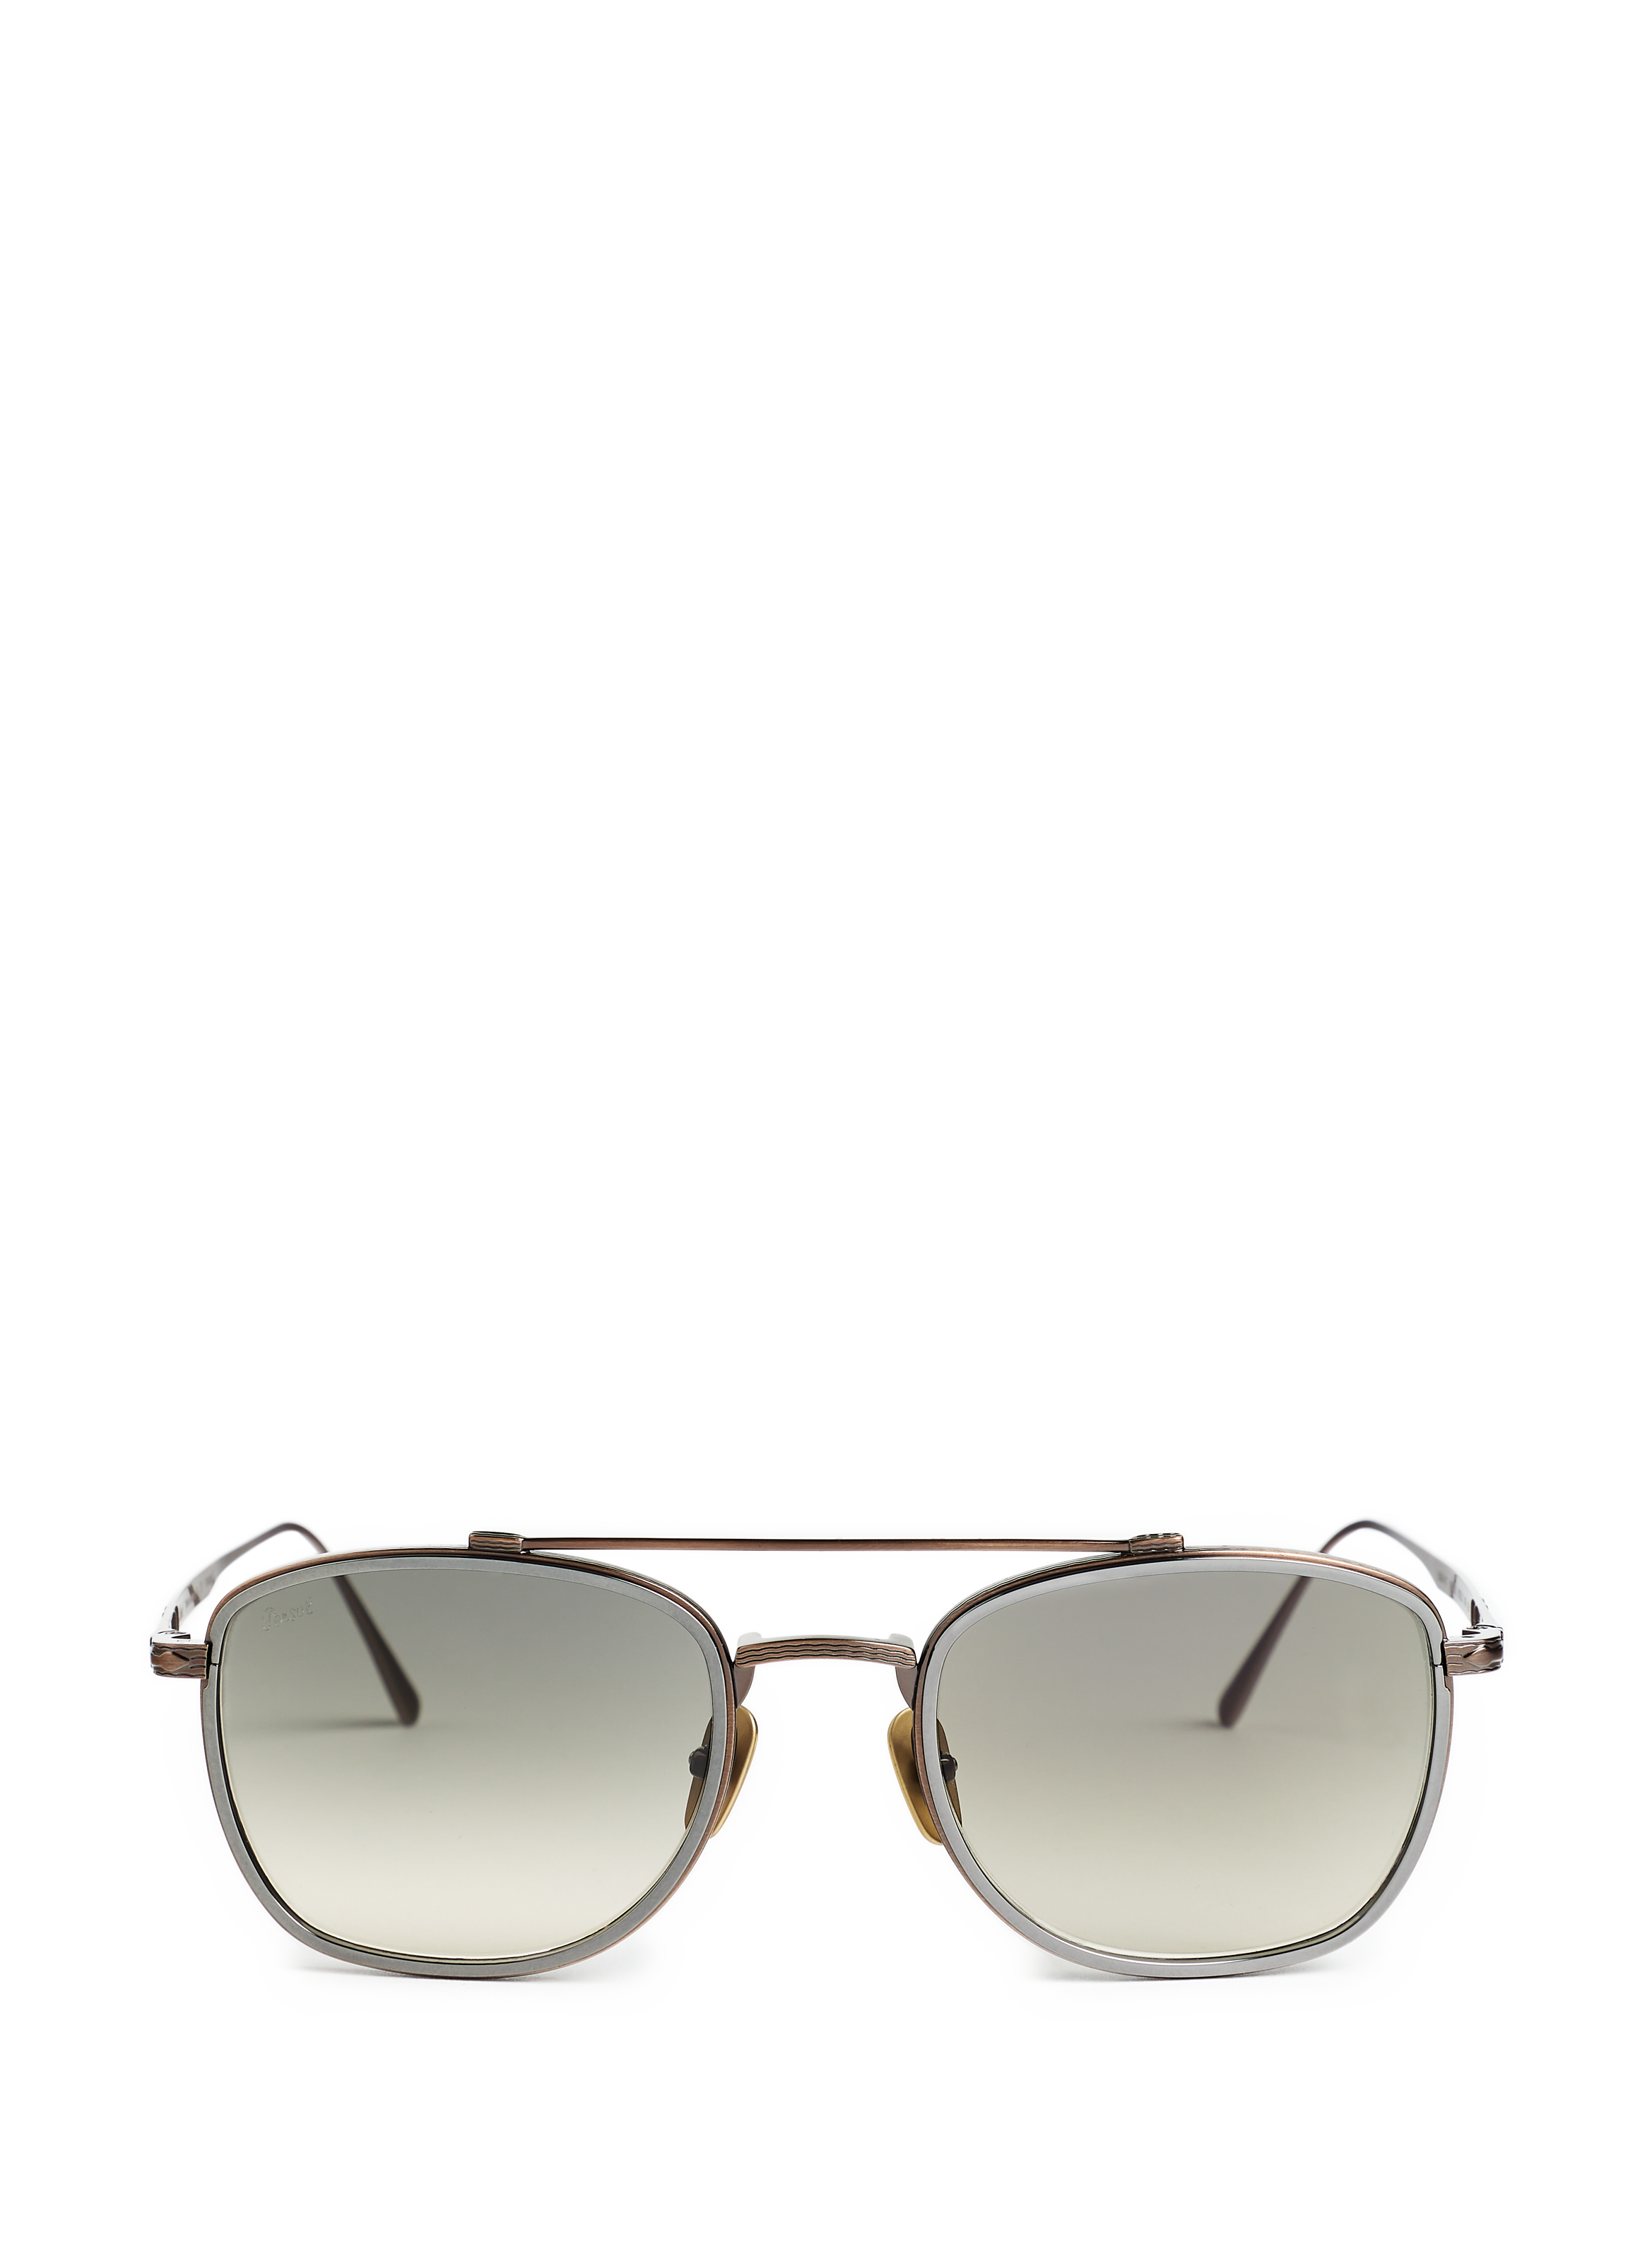 Persol Men | Sunglasses Shop Online Free Shipping - Ottica SM